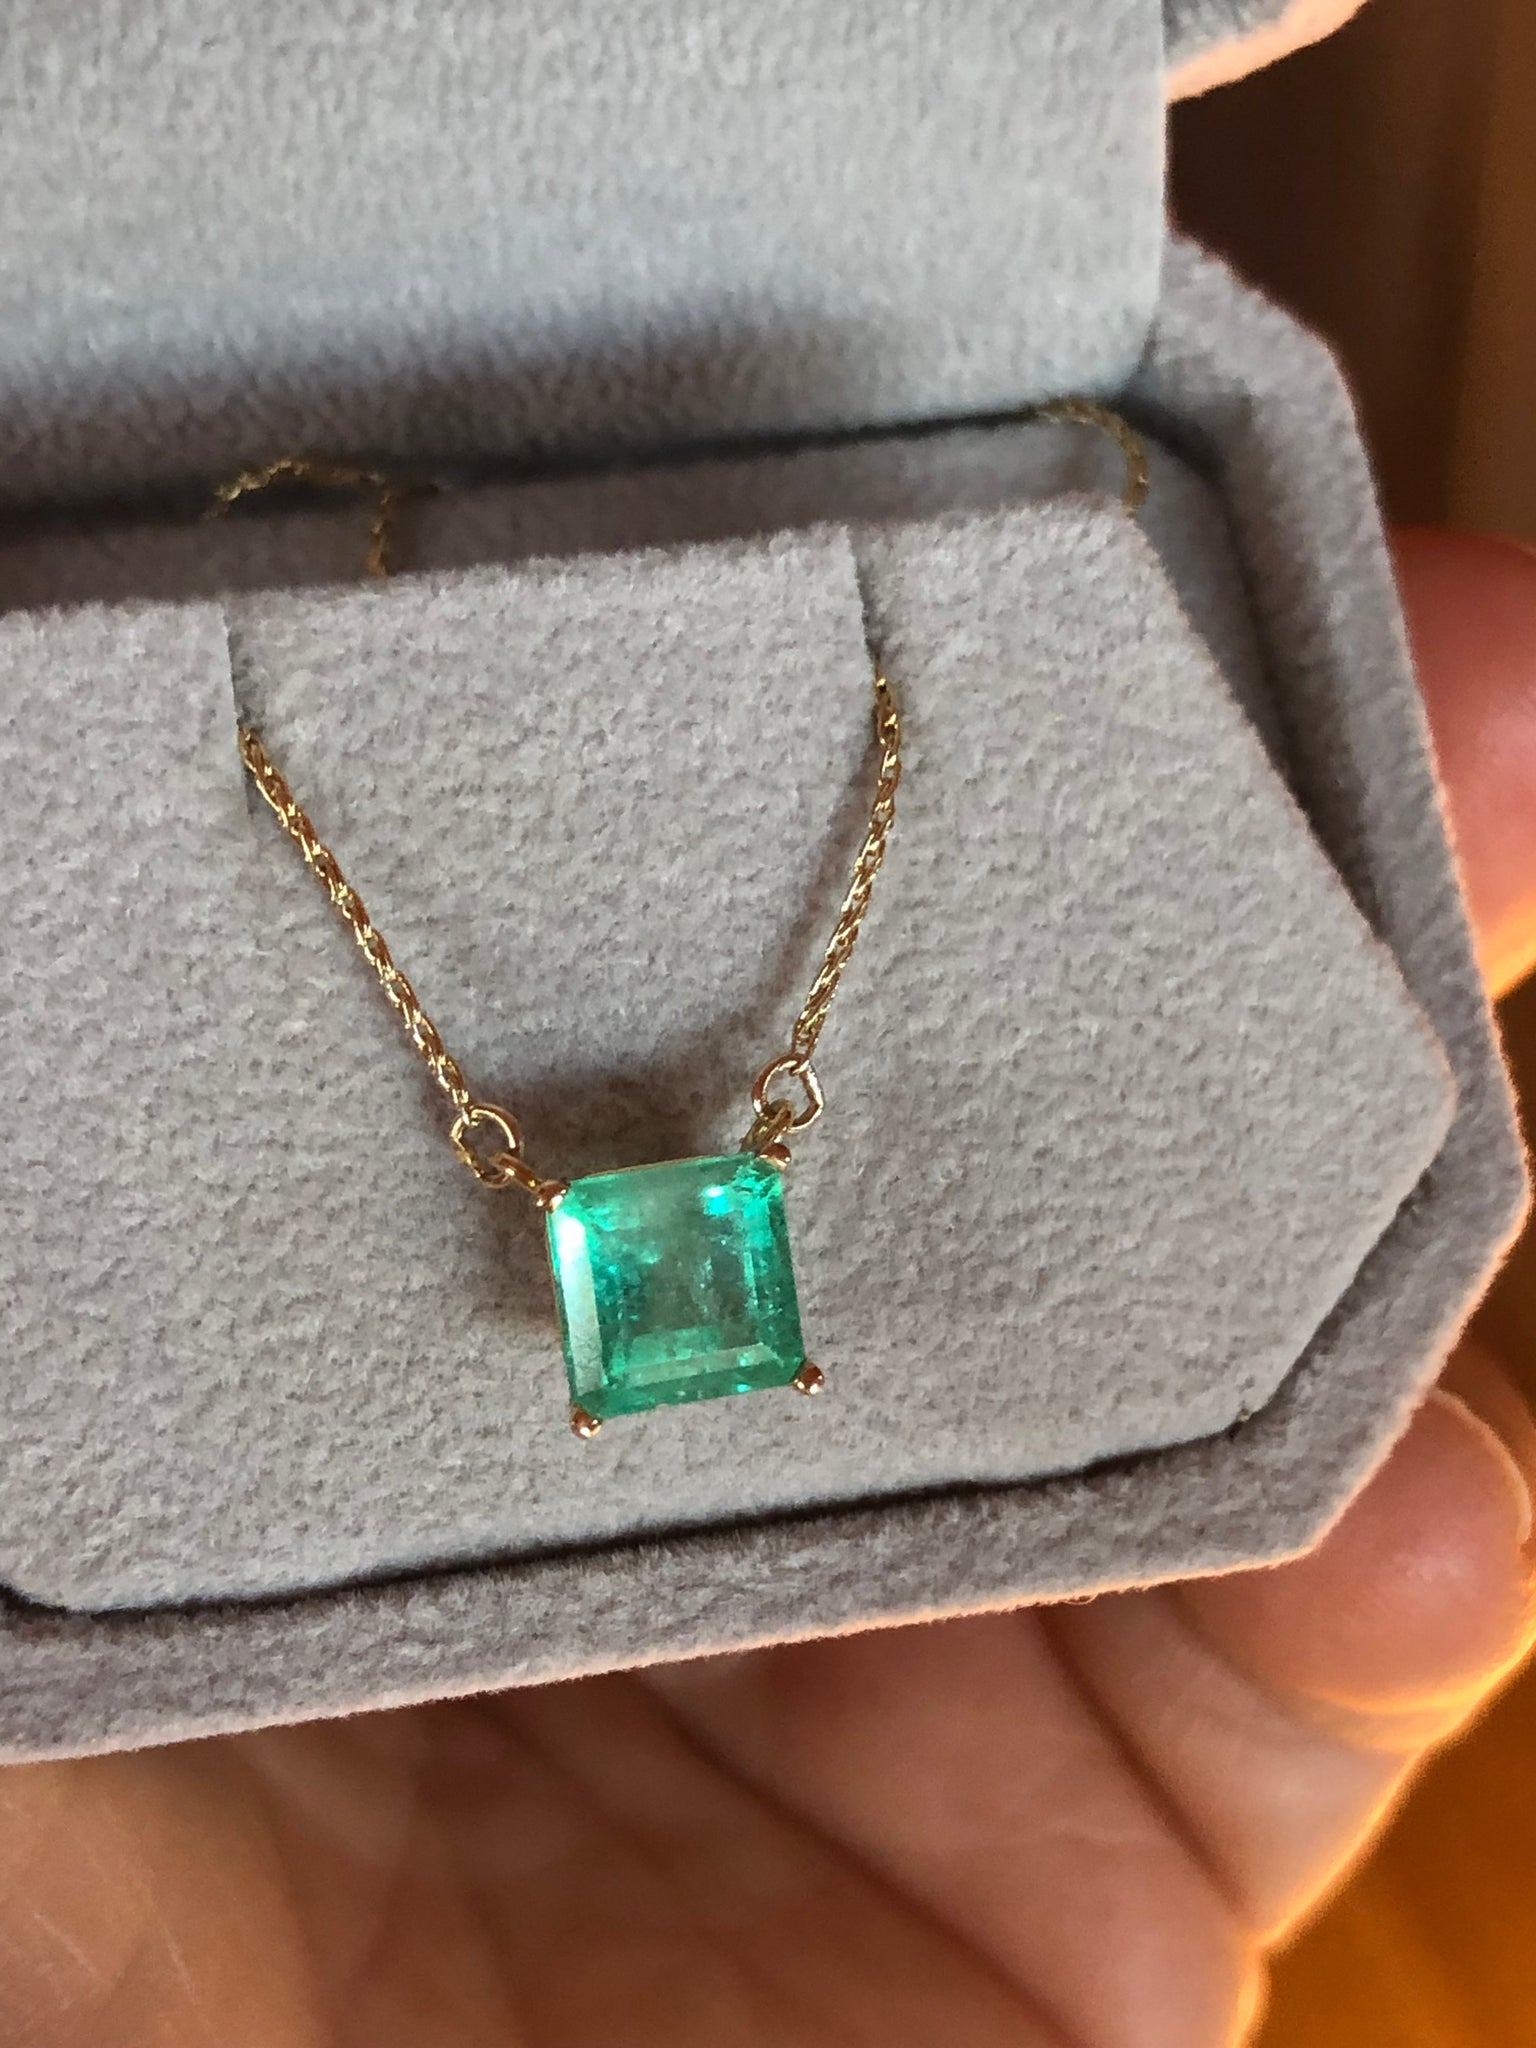 1.68 Carat Colombian Emerald Pendant Chain Necklace 14K Gold